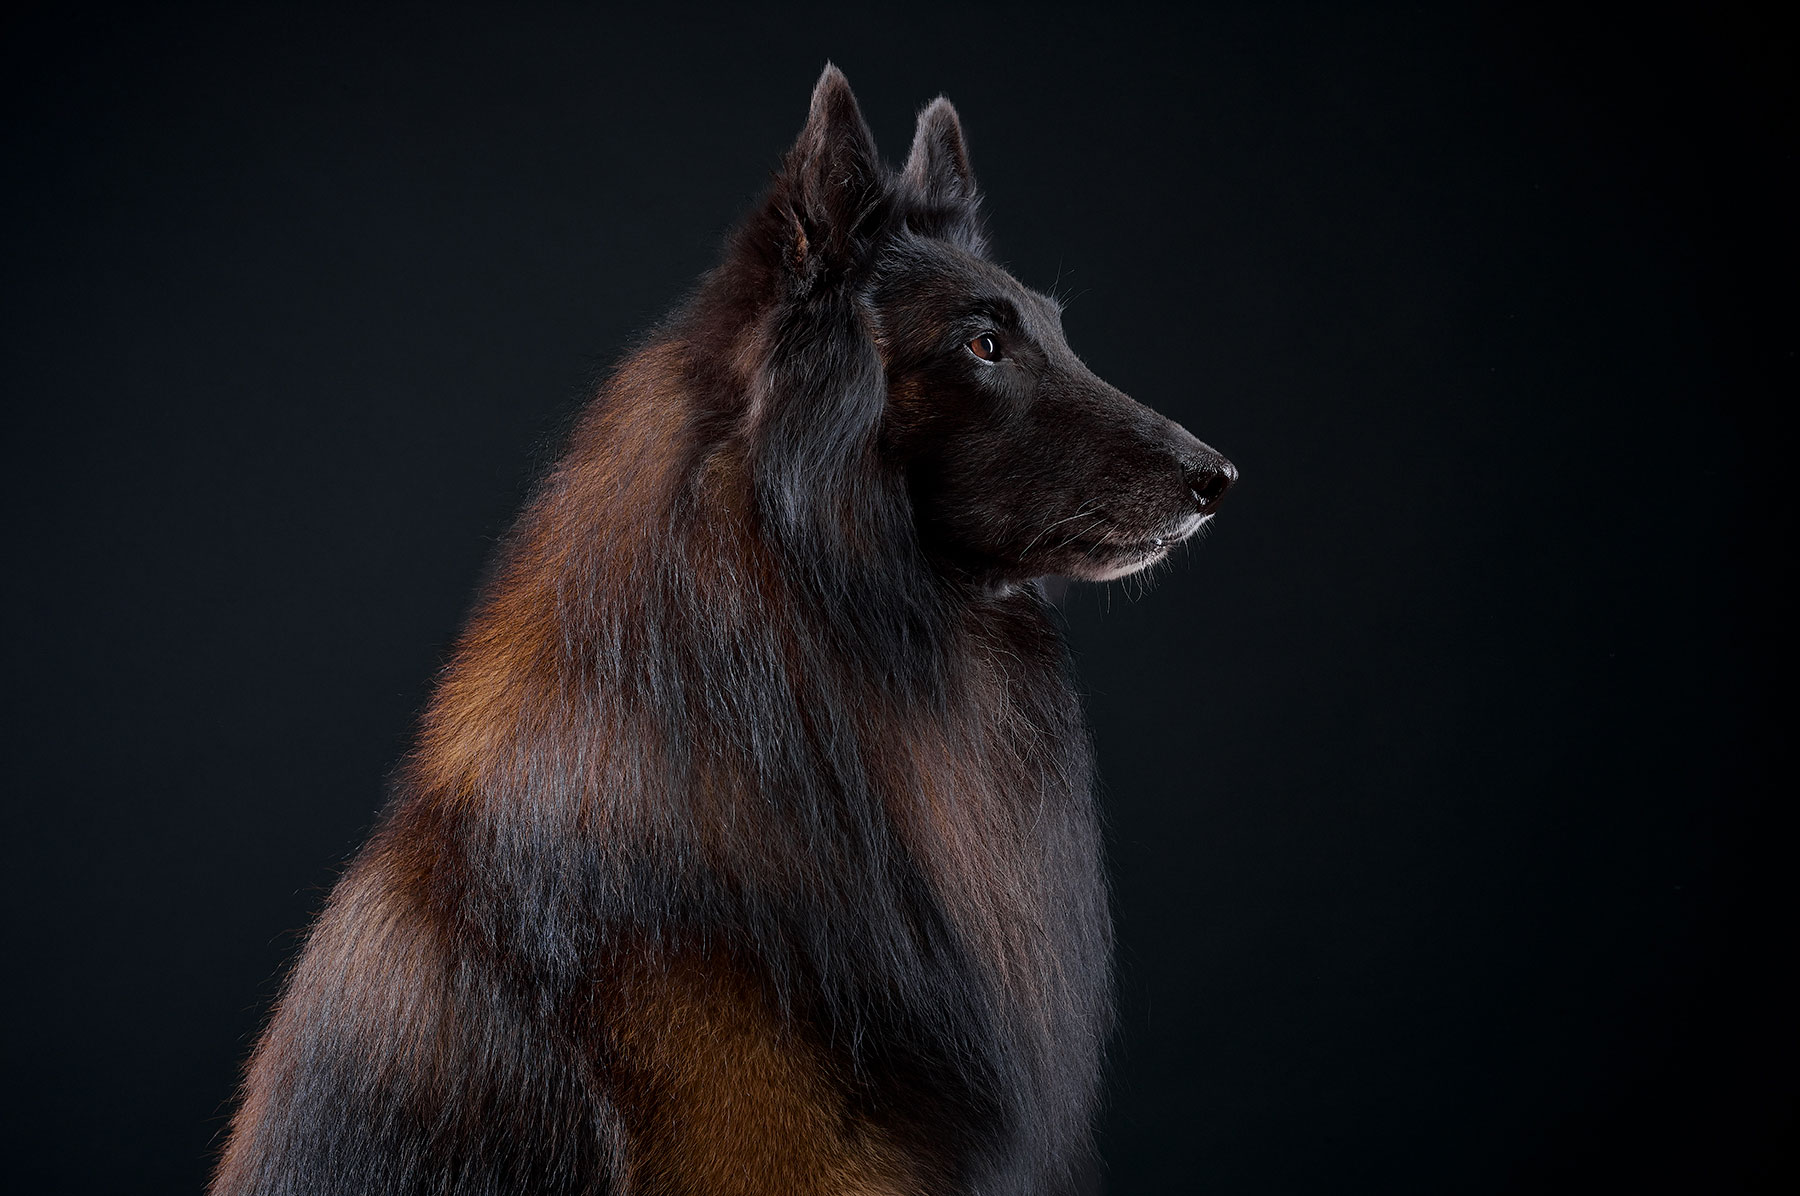 A-studio-portrait-of-a-Belgian-Tervuren-dog-against-a-black-background